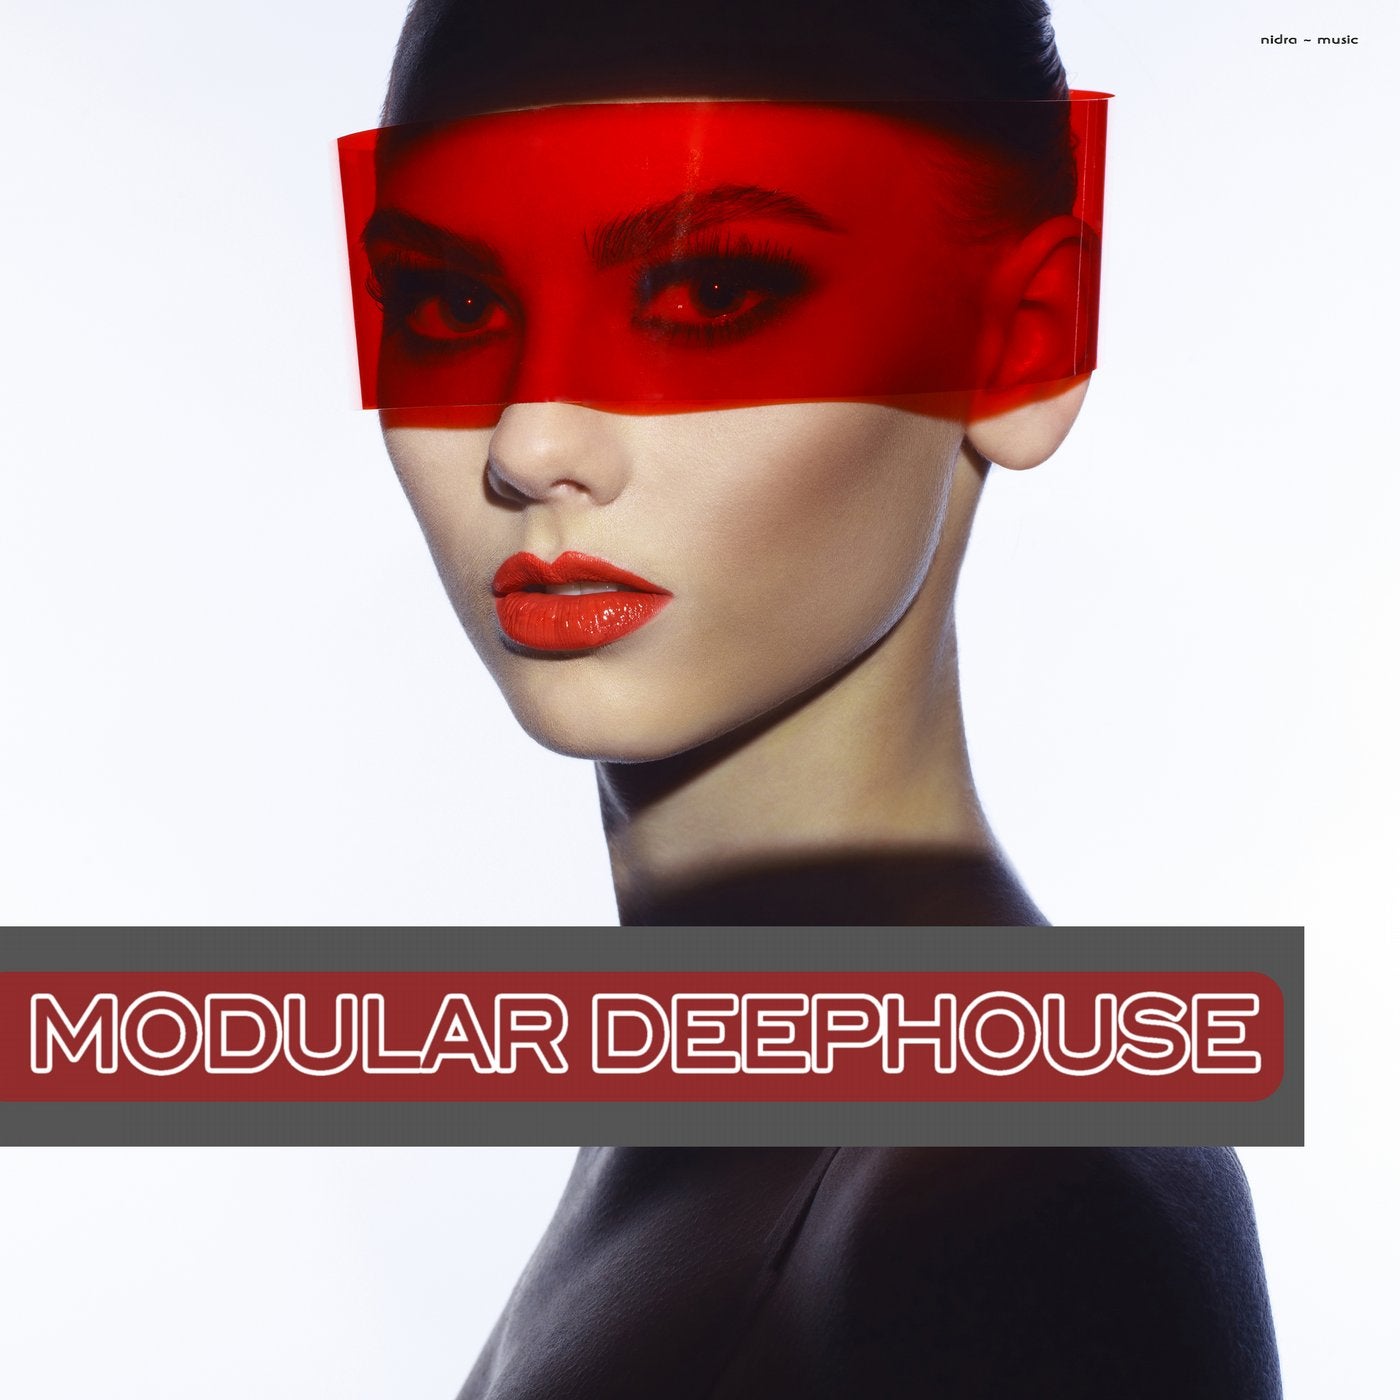 Modular Deephouse